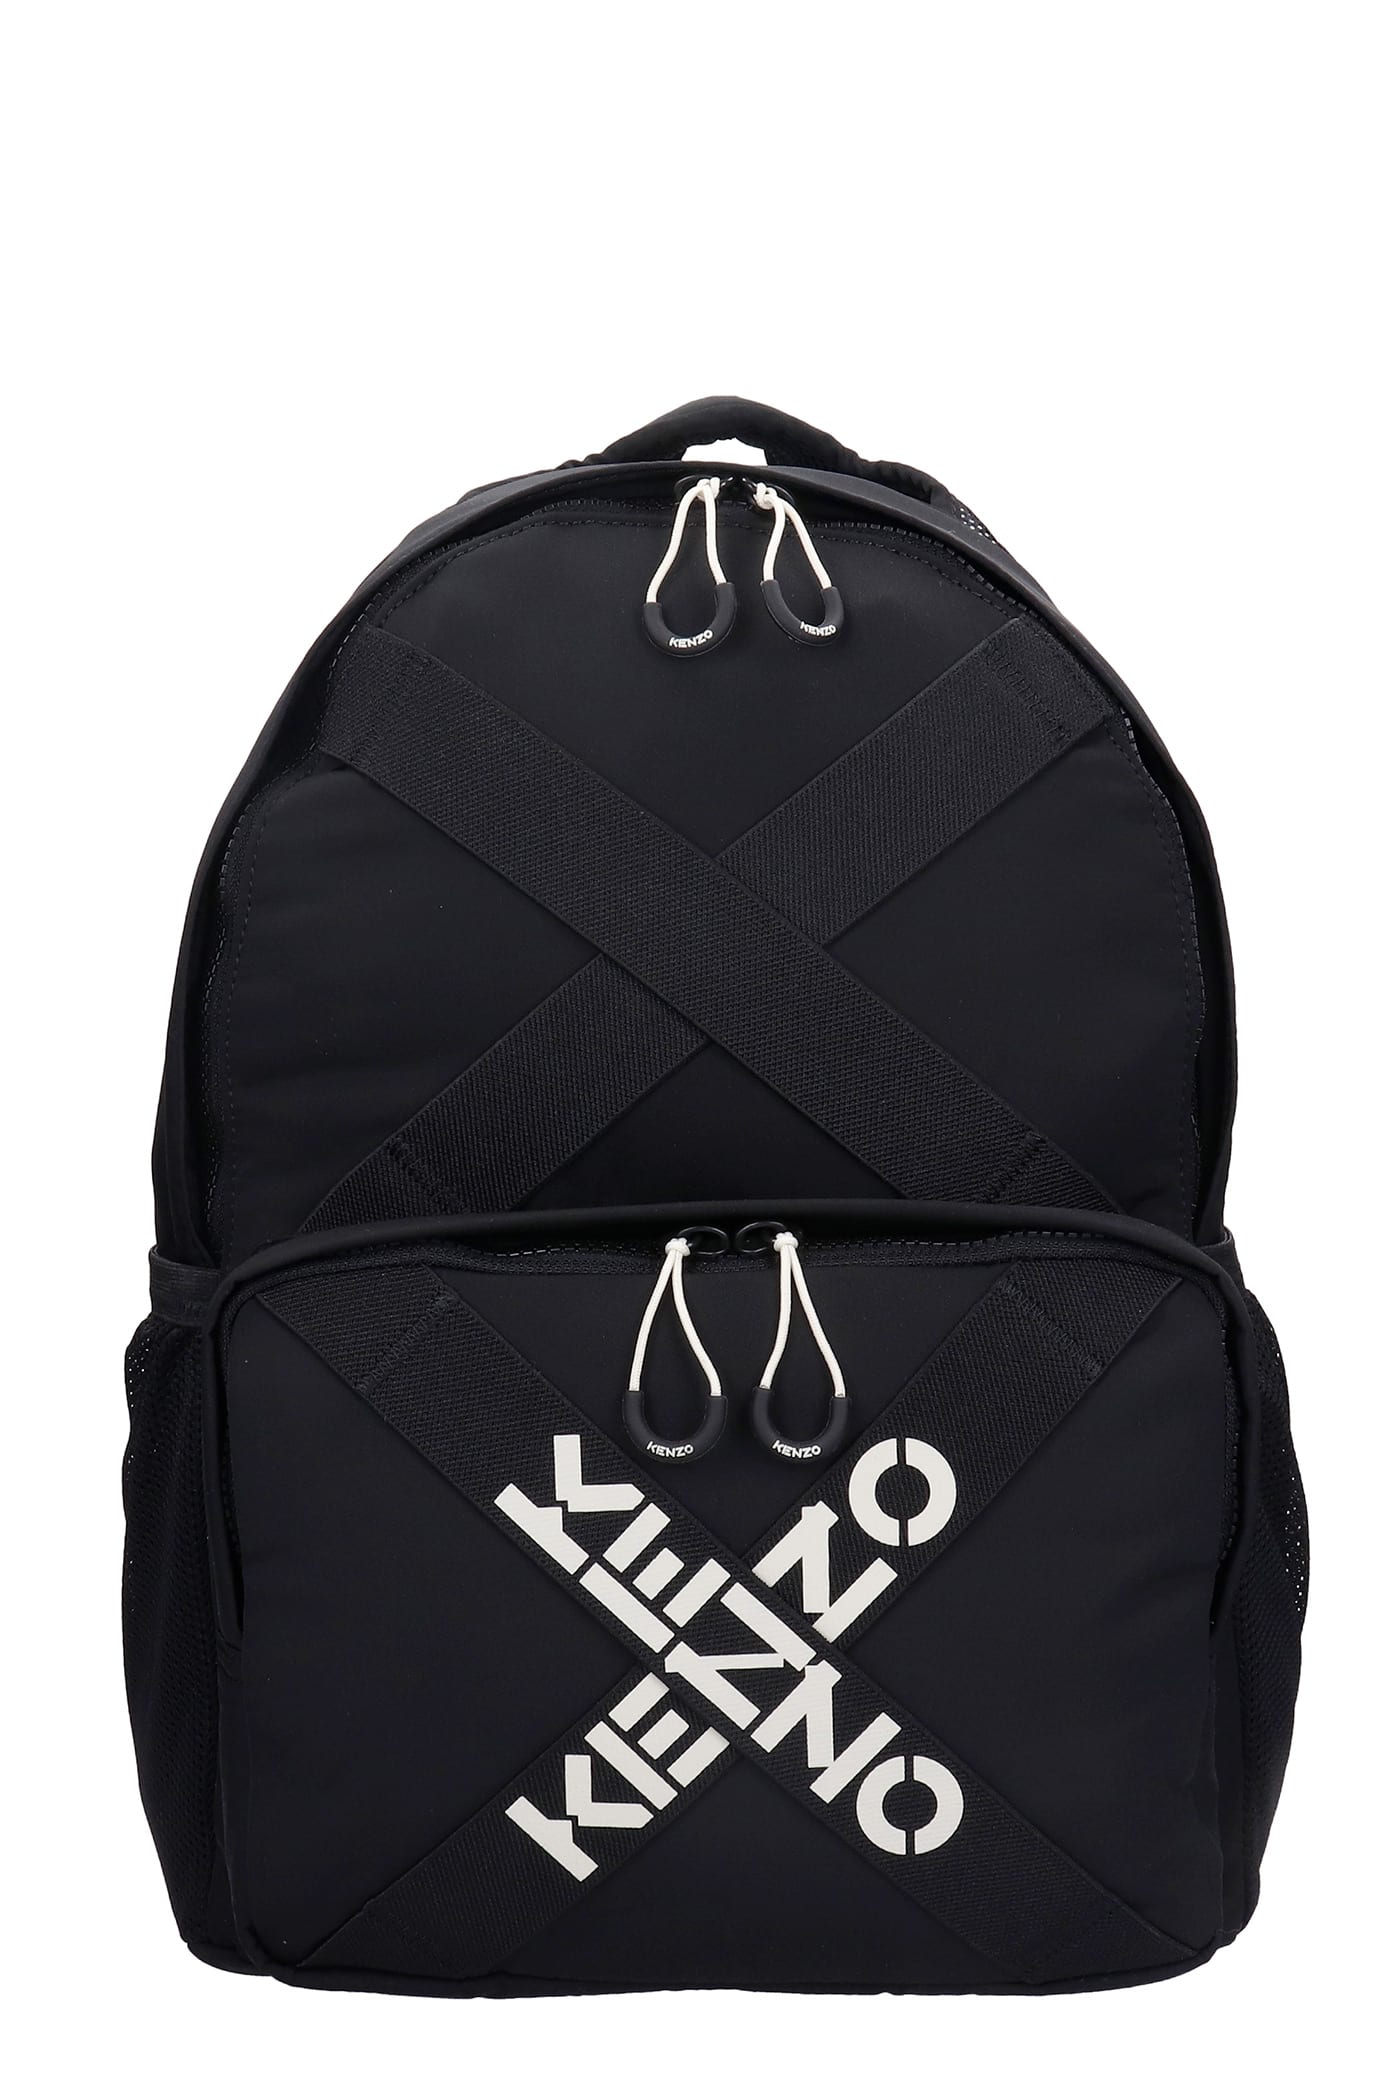 Kenzo Backpack In Black Polyester